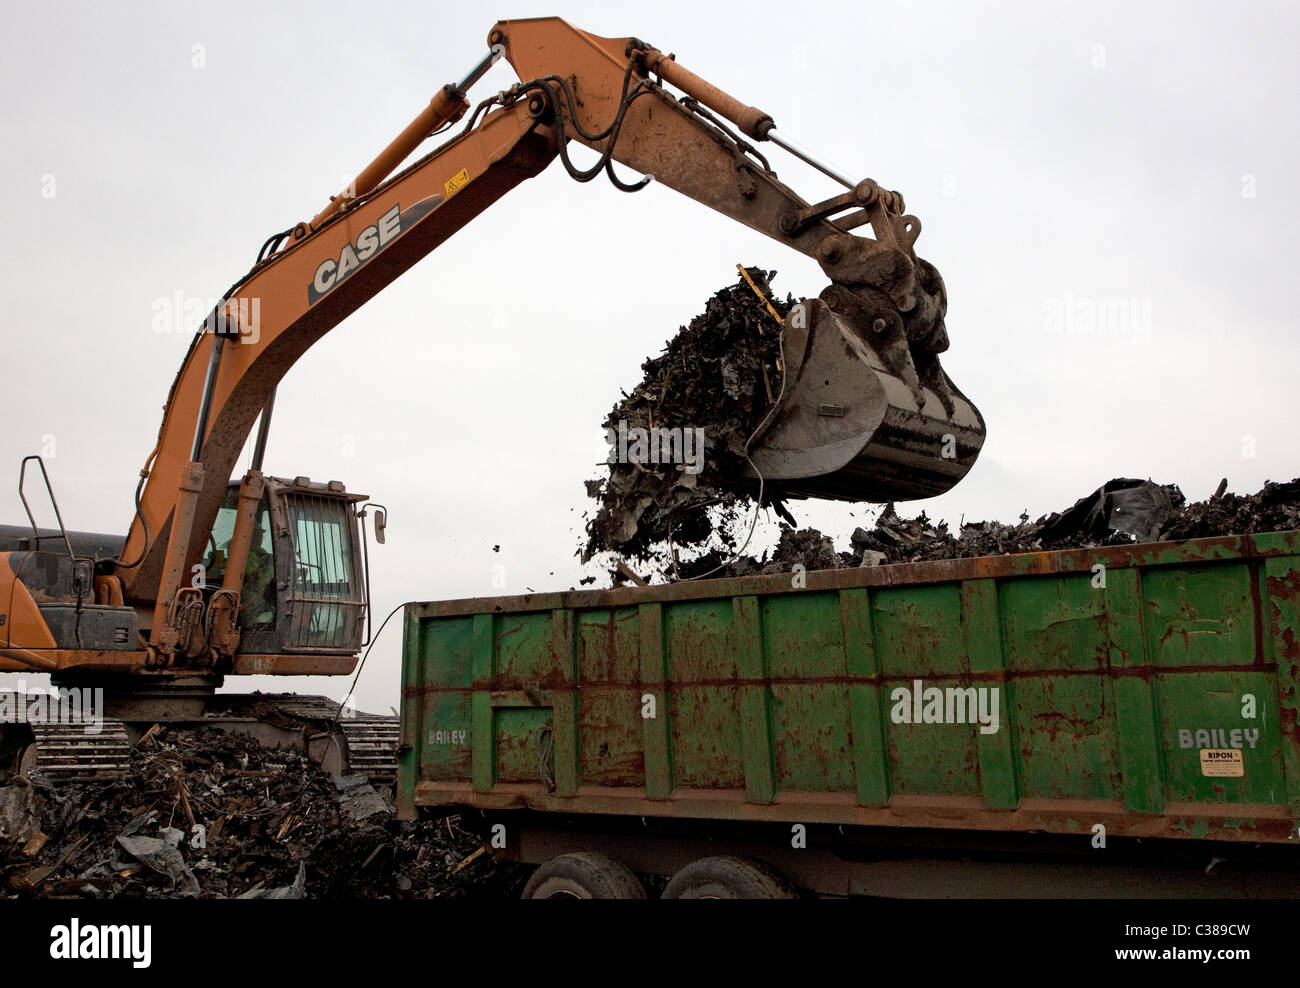 JCB fills trailer on landfill site in England Stock Photo